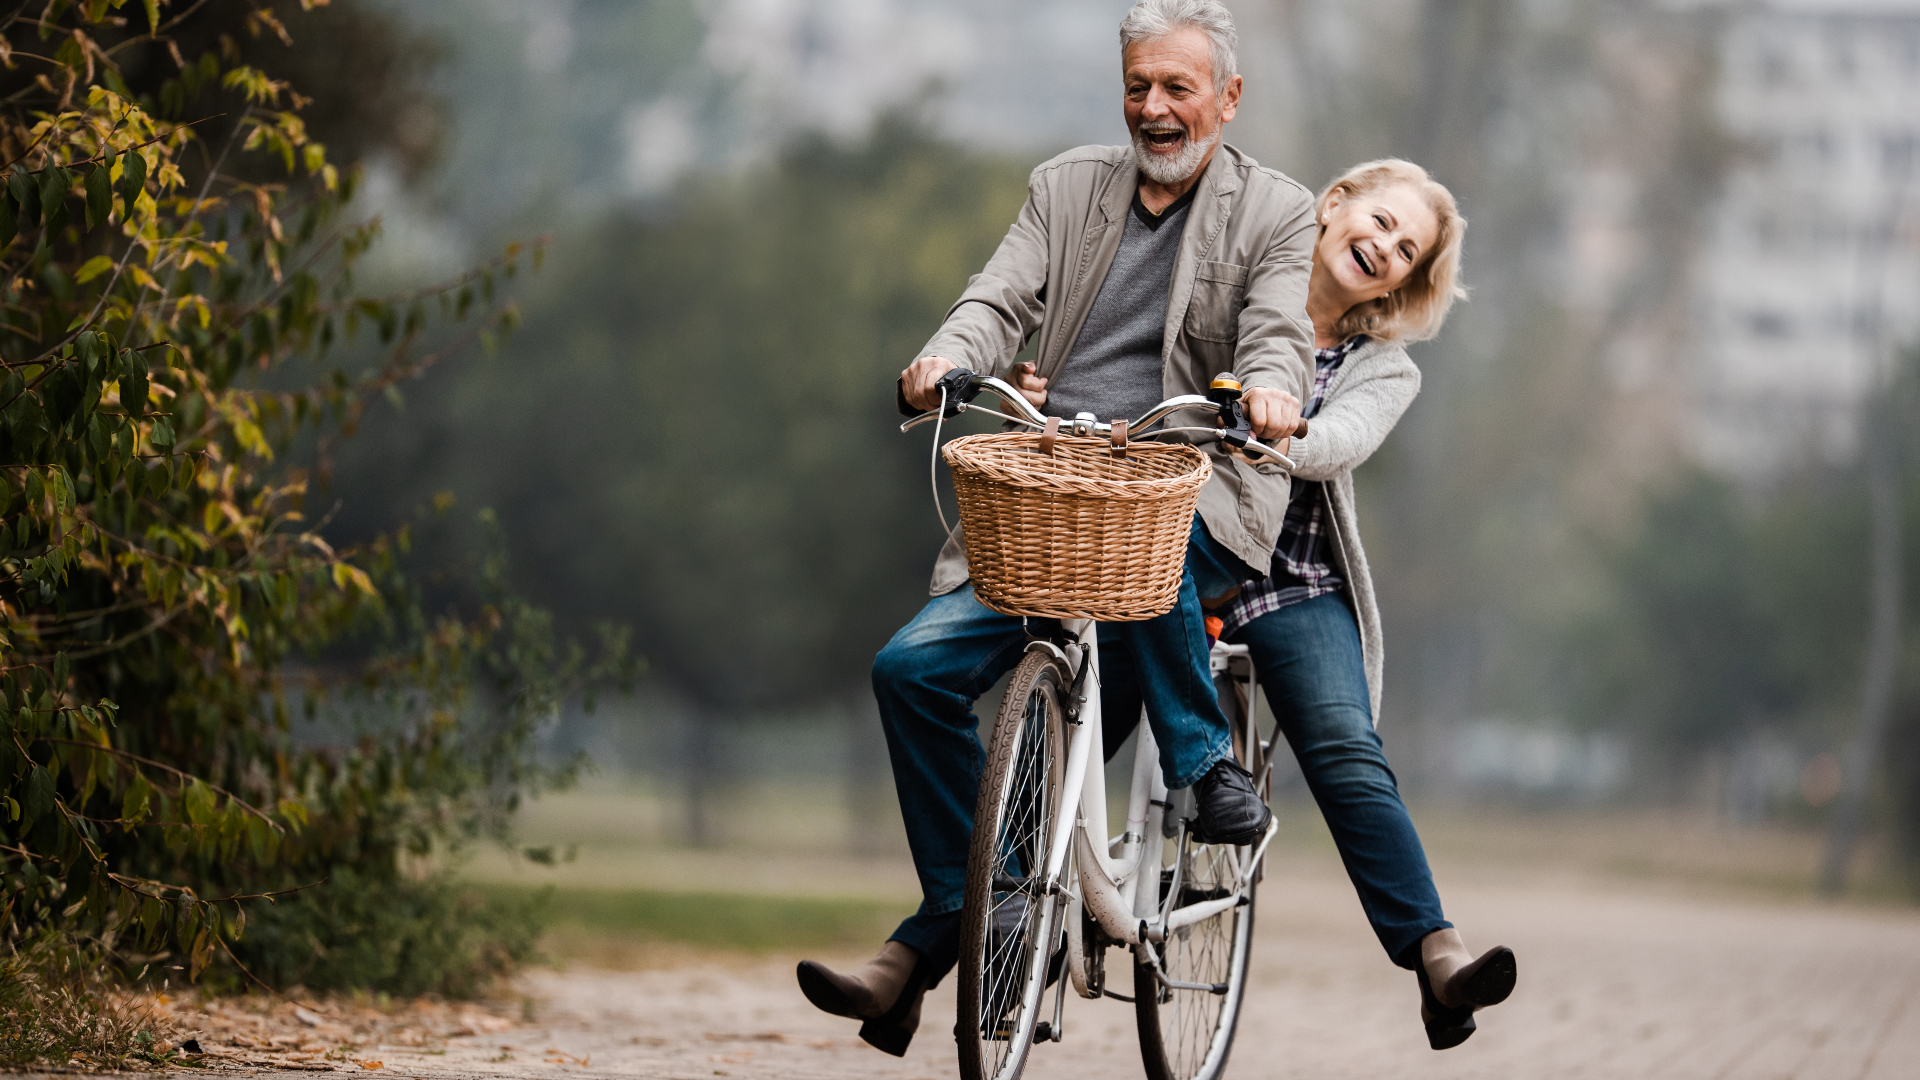 A senior couple ride a bike together